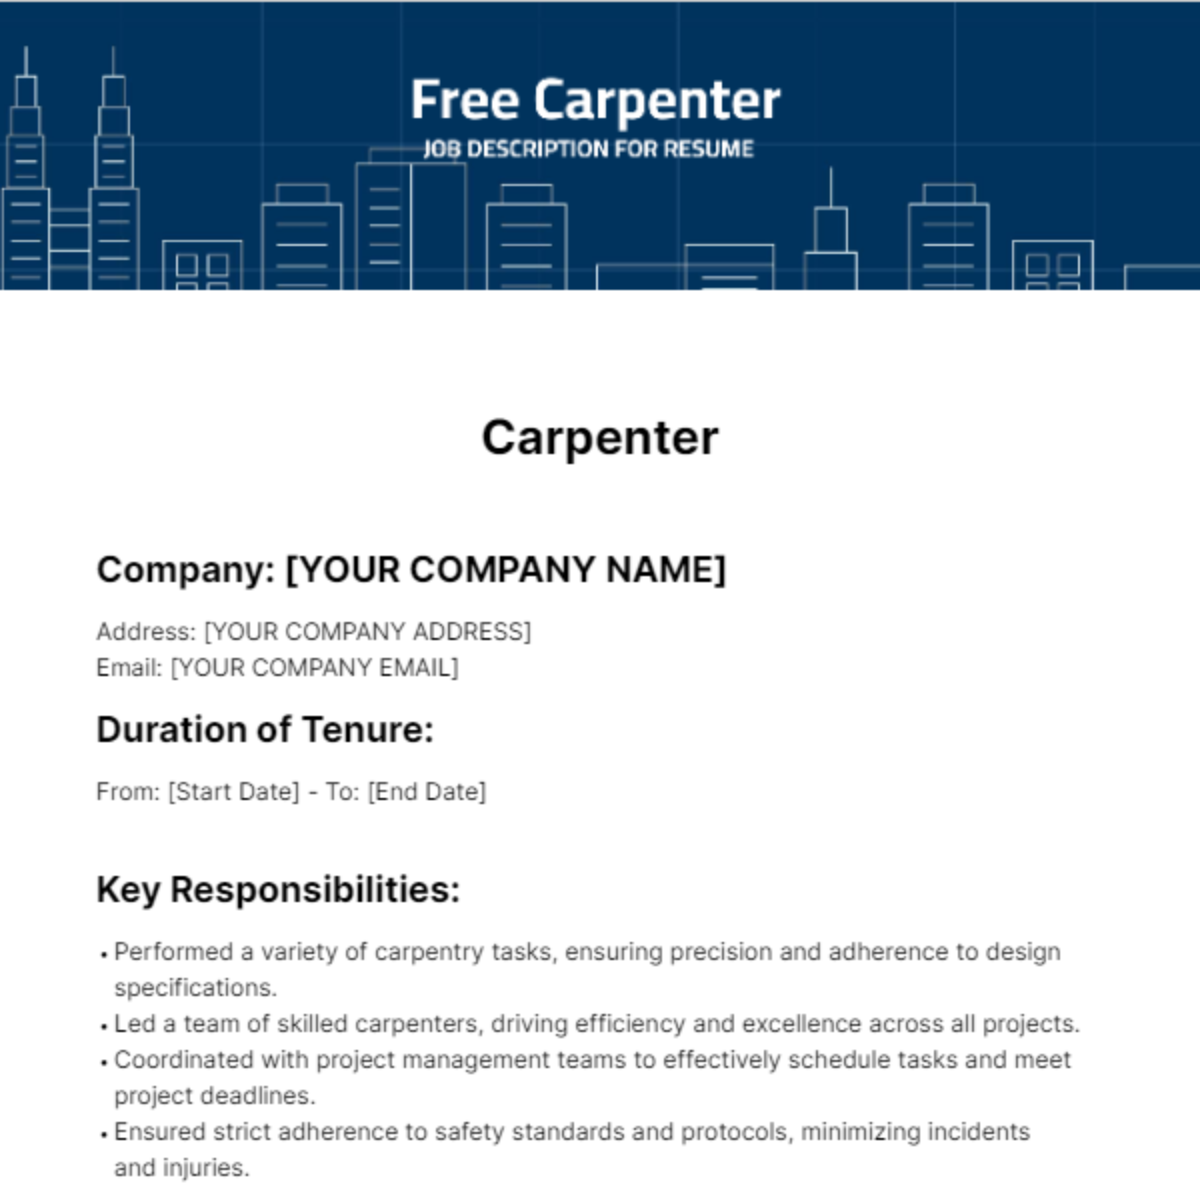 Carpenter Job Description for Resume Template